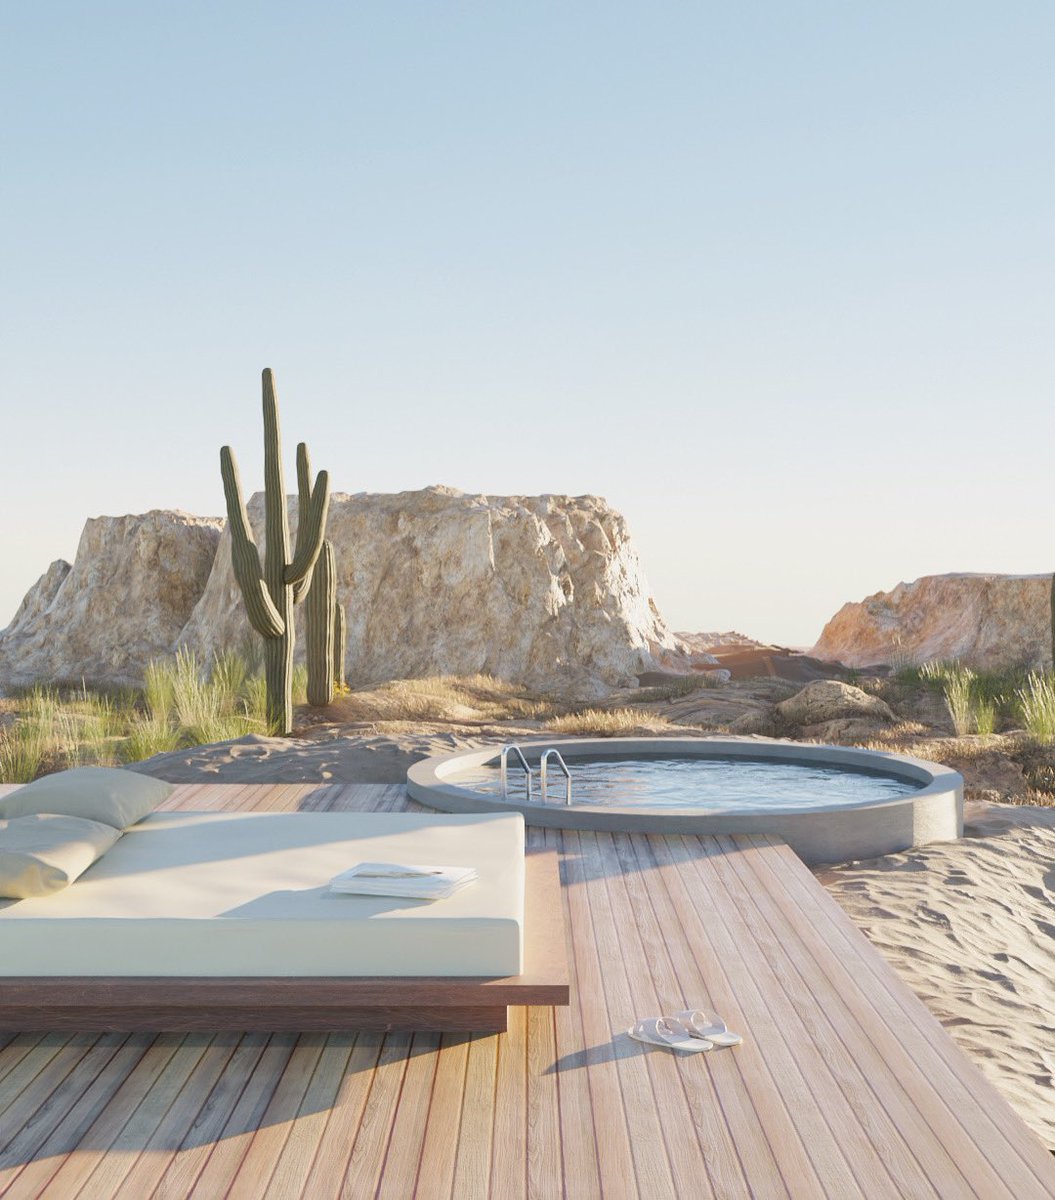 Villa desertia #b3d #blender #render #dreamscape #surreal #archviz #digitalart #nftart